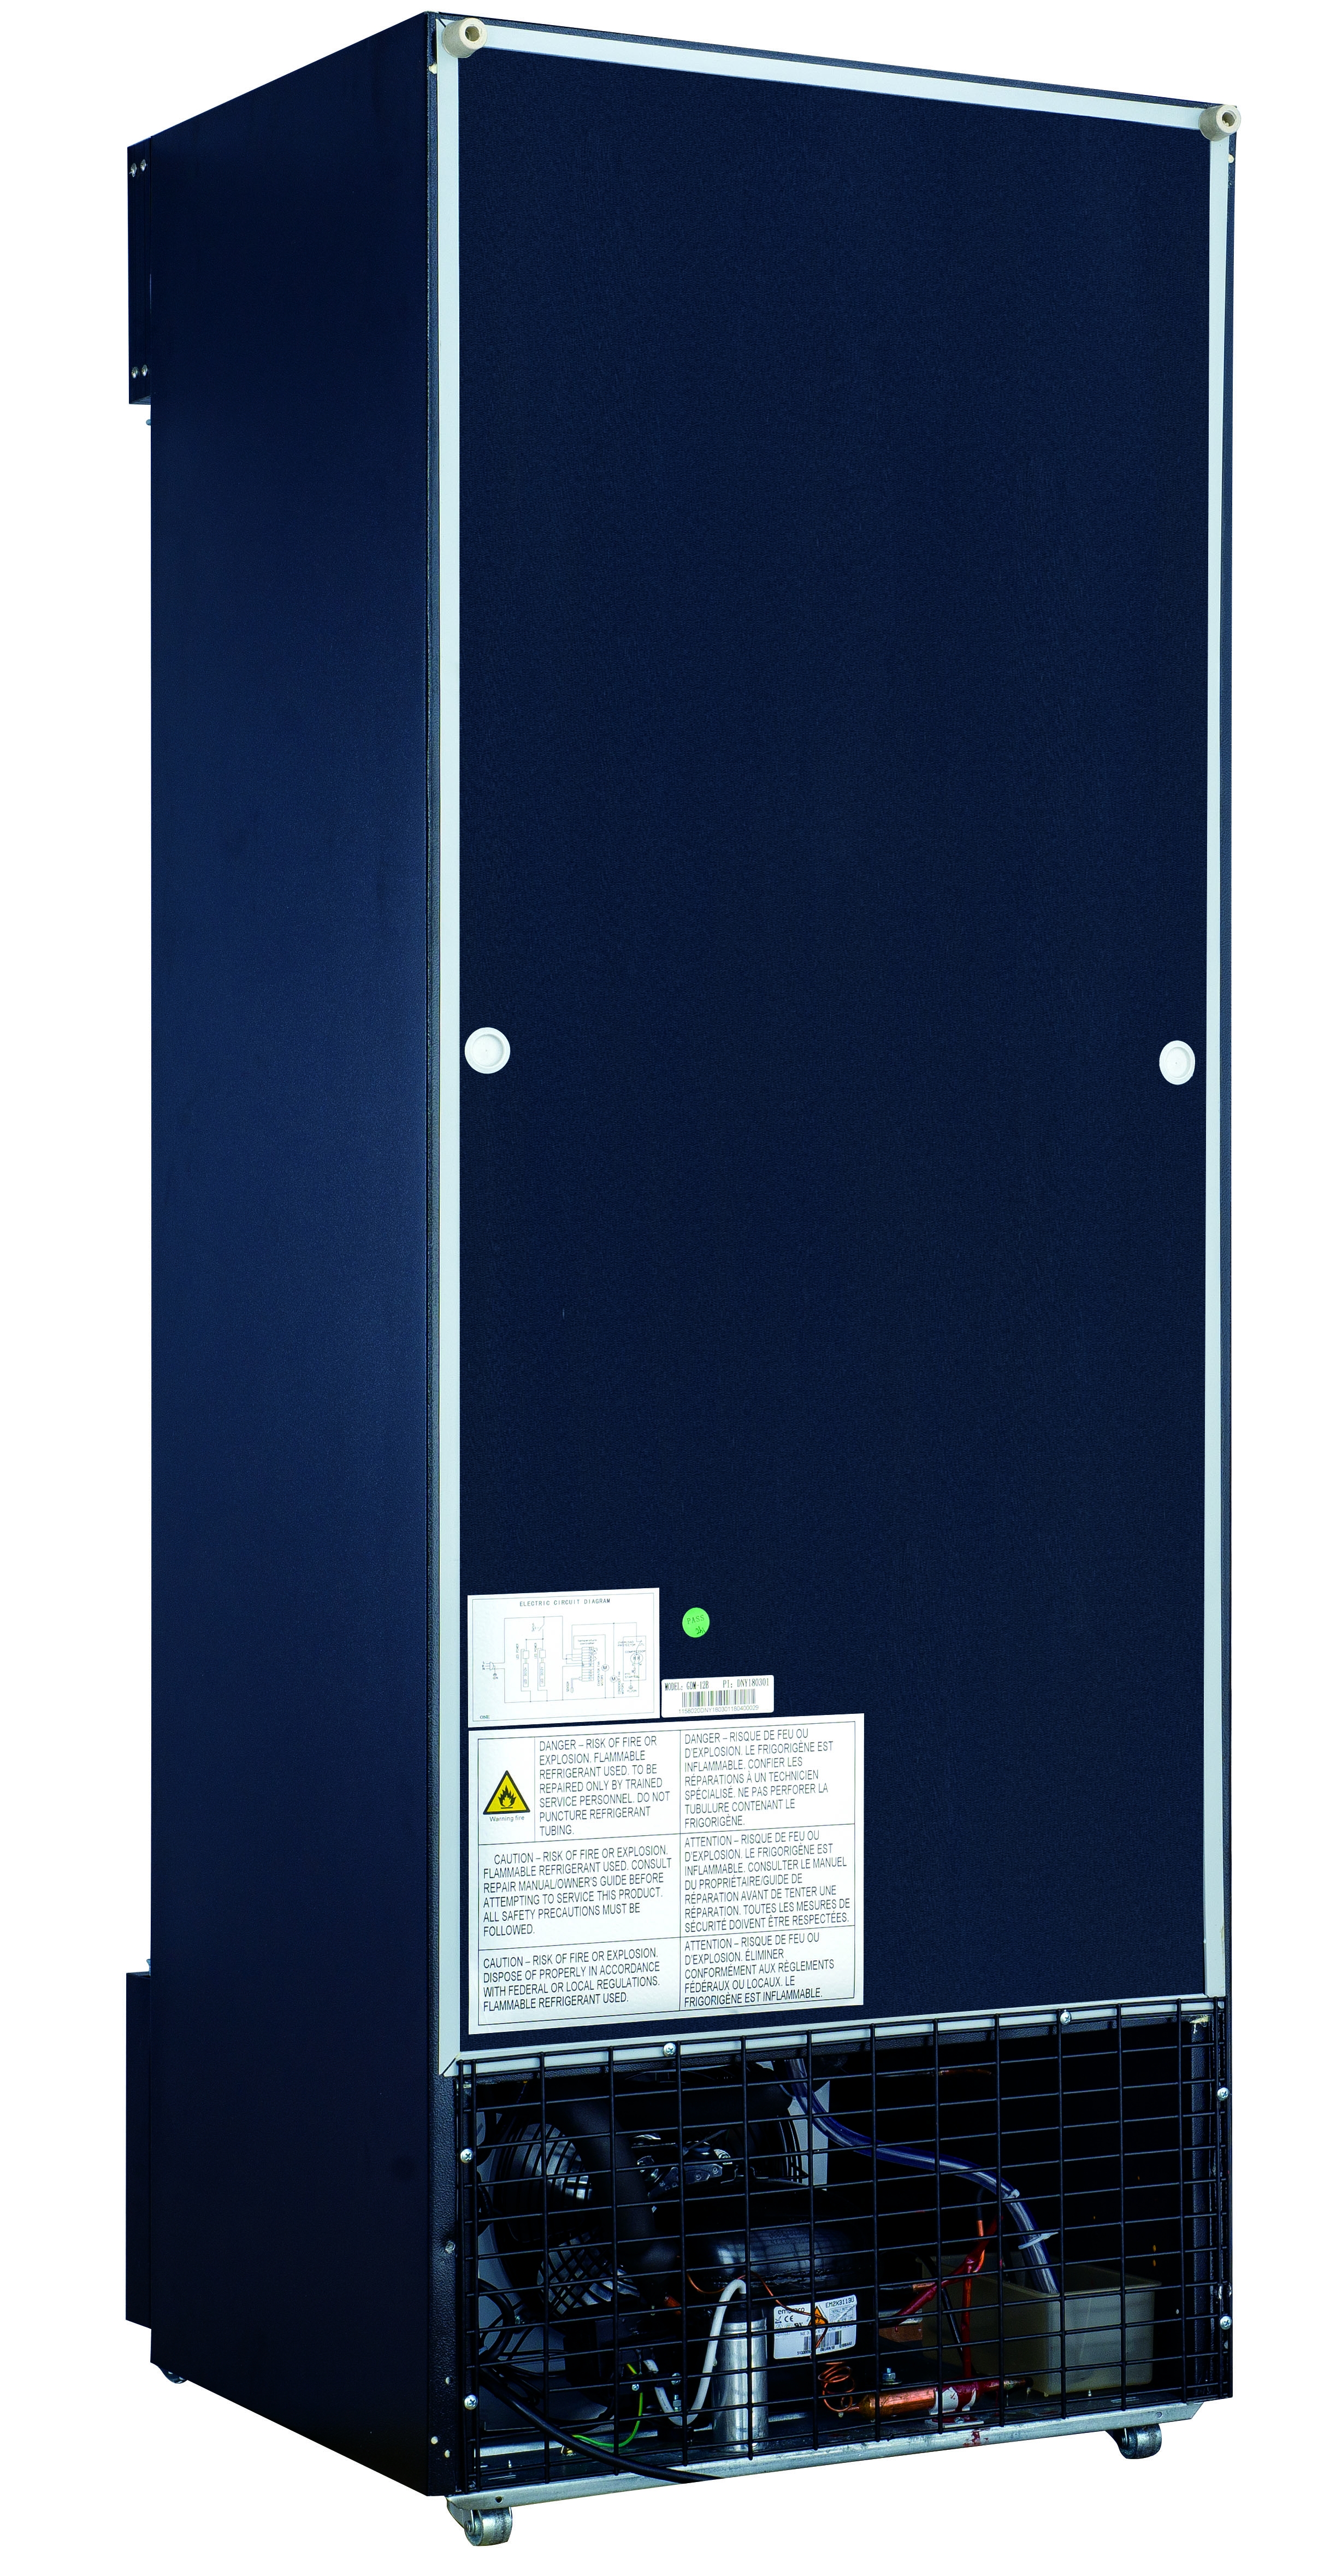 Details about   New Dukers DSM-12R Commercial Single Glass Swing Door Merchandiser Refrigerator 